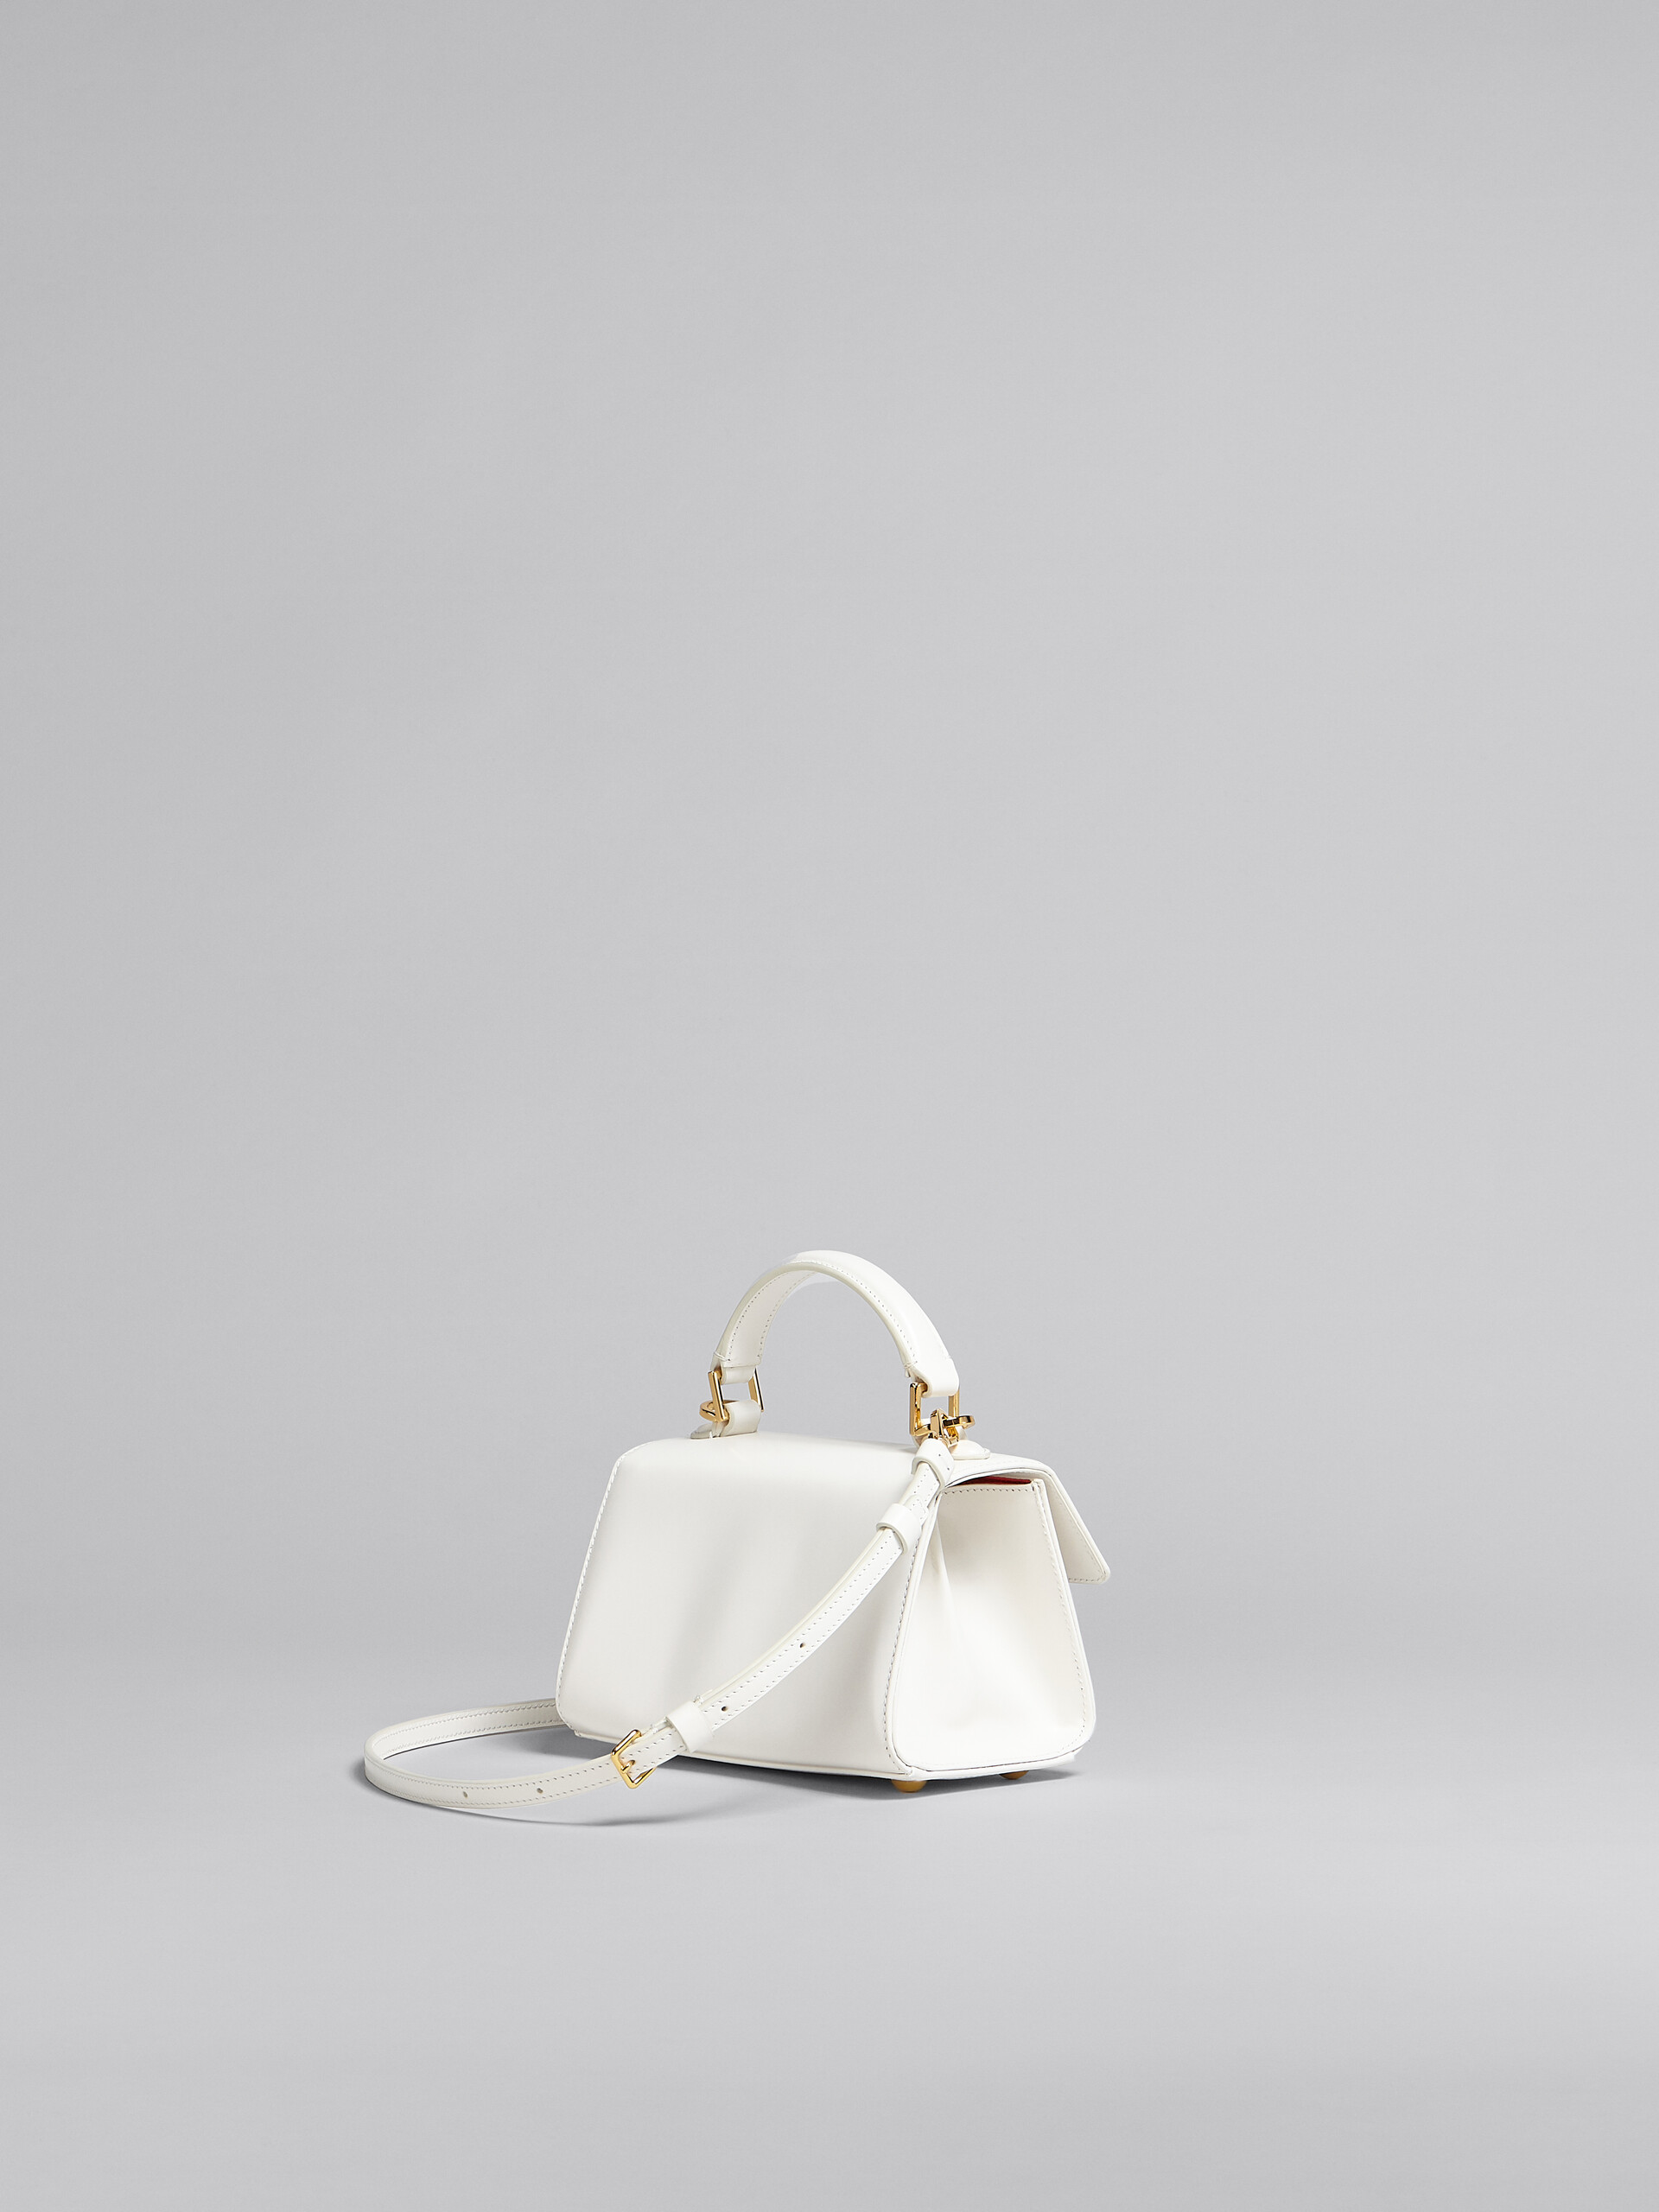 Relativity Mini Bag in white leather - Handbag - Image 3